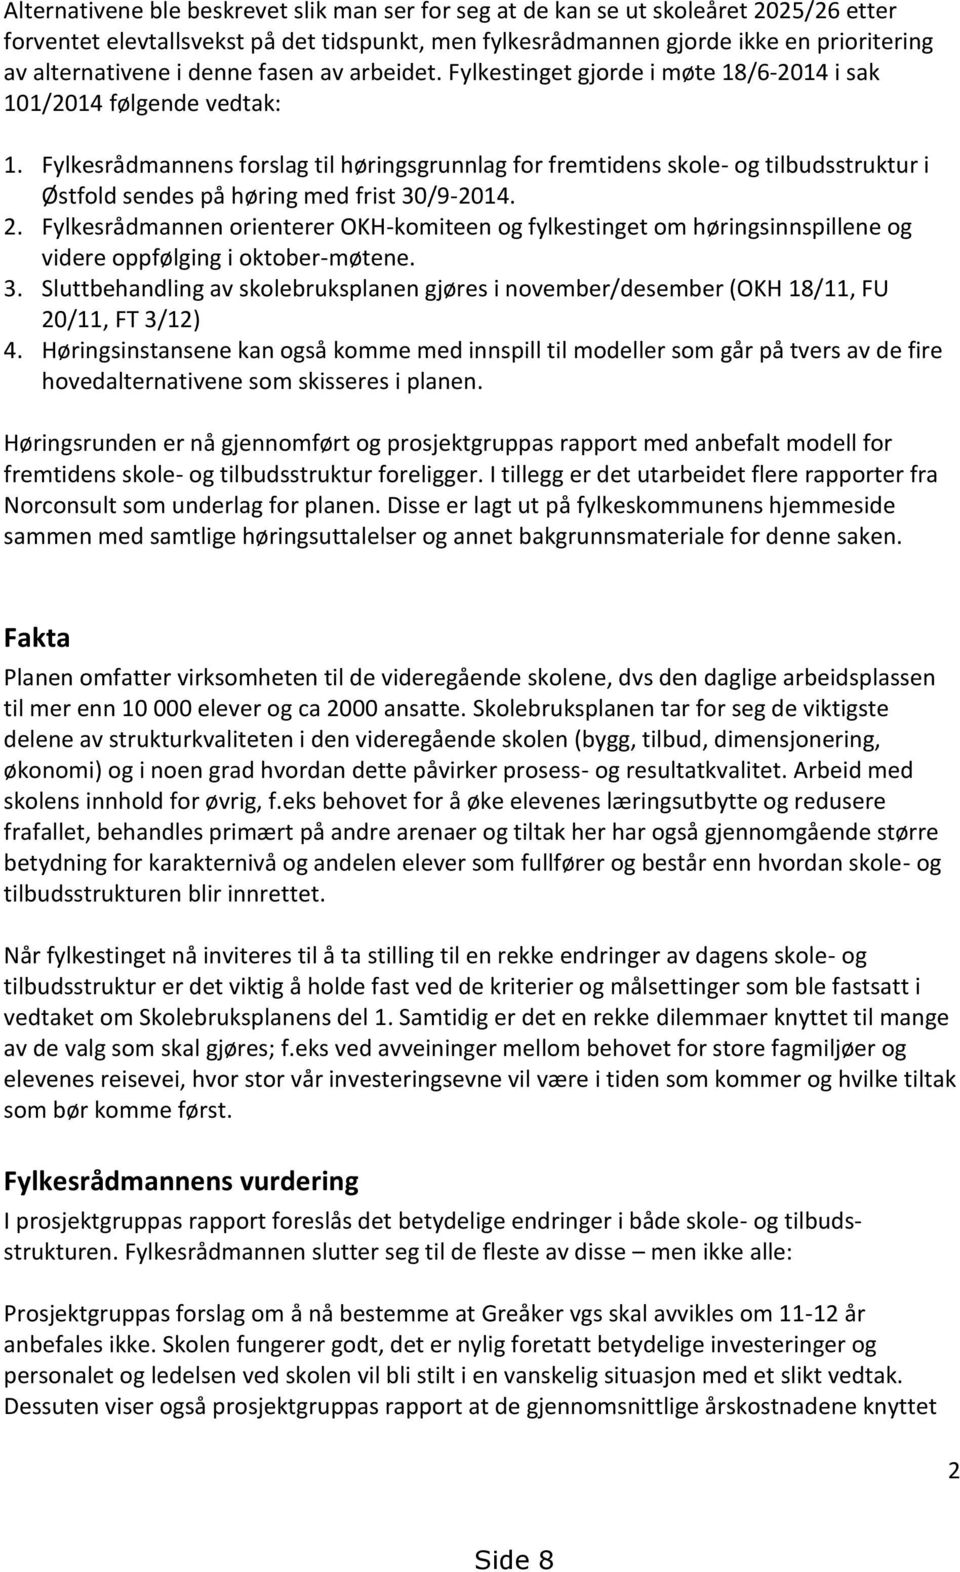 Fylkesrådmannens forslag til høringsgrunnlag for fremtidens skole- og tilbudsstruktur i Østfold sendes på høring med frist 30/9-2014. 2.